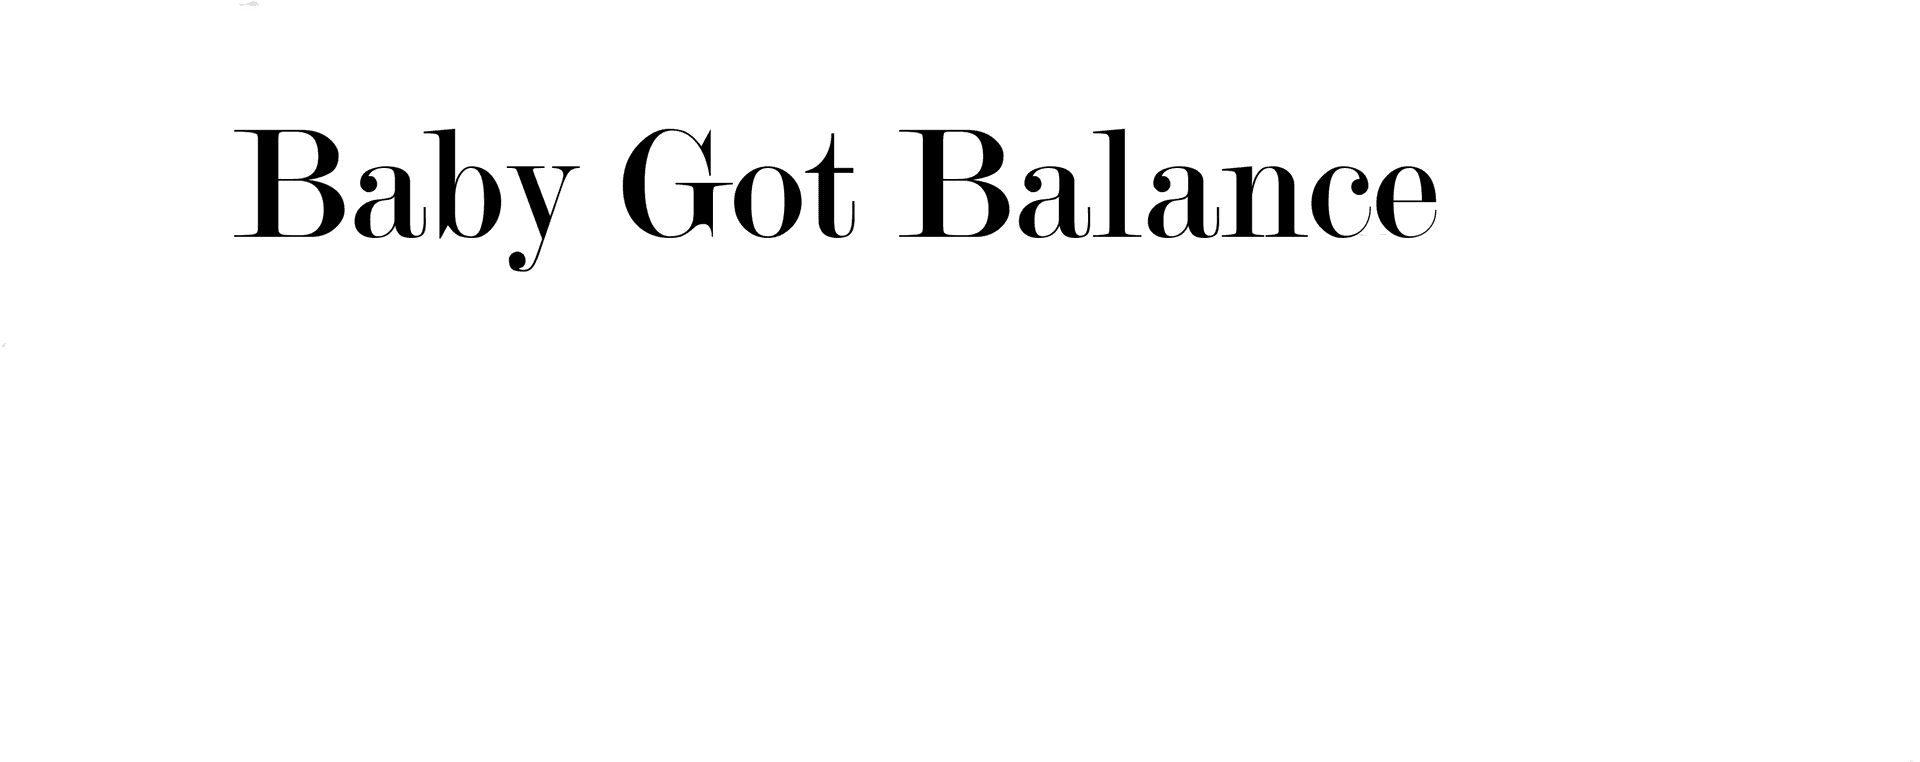 Baby Got Balance Text PNG image